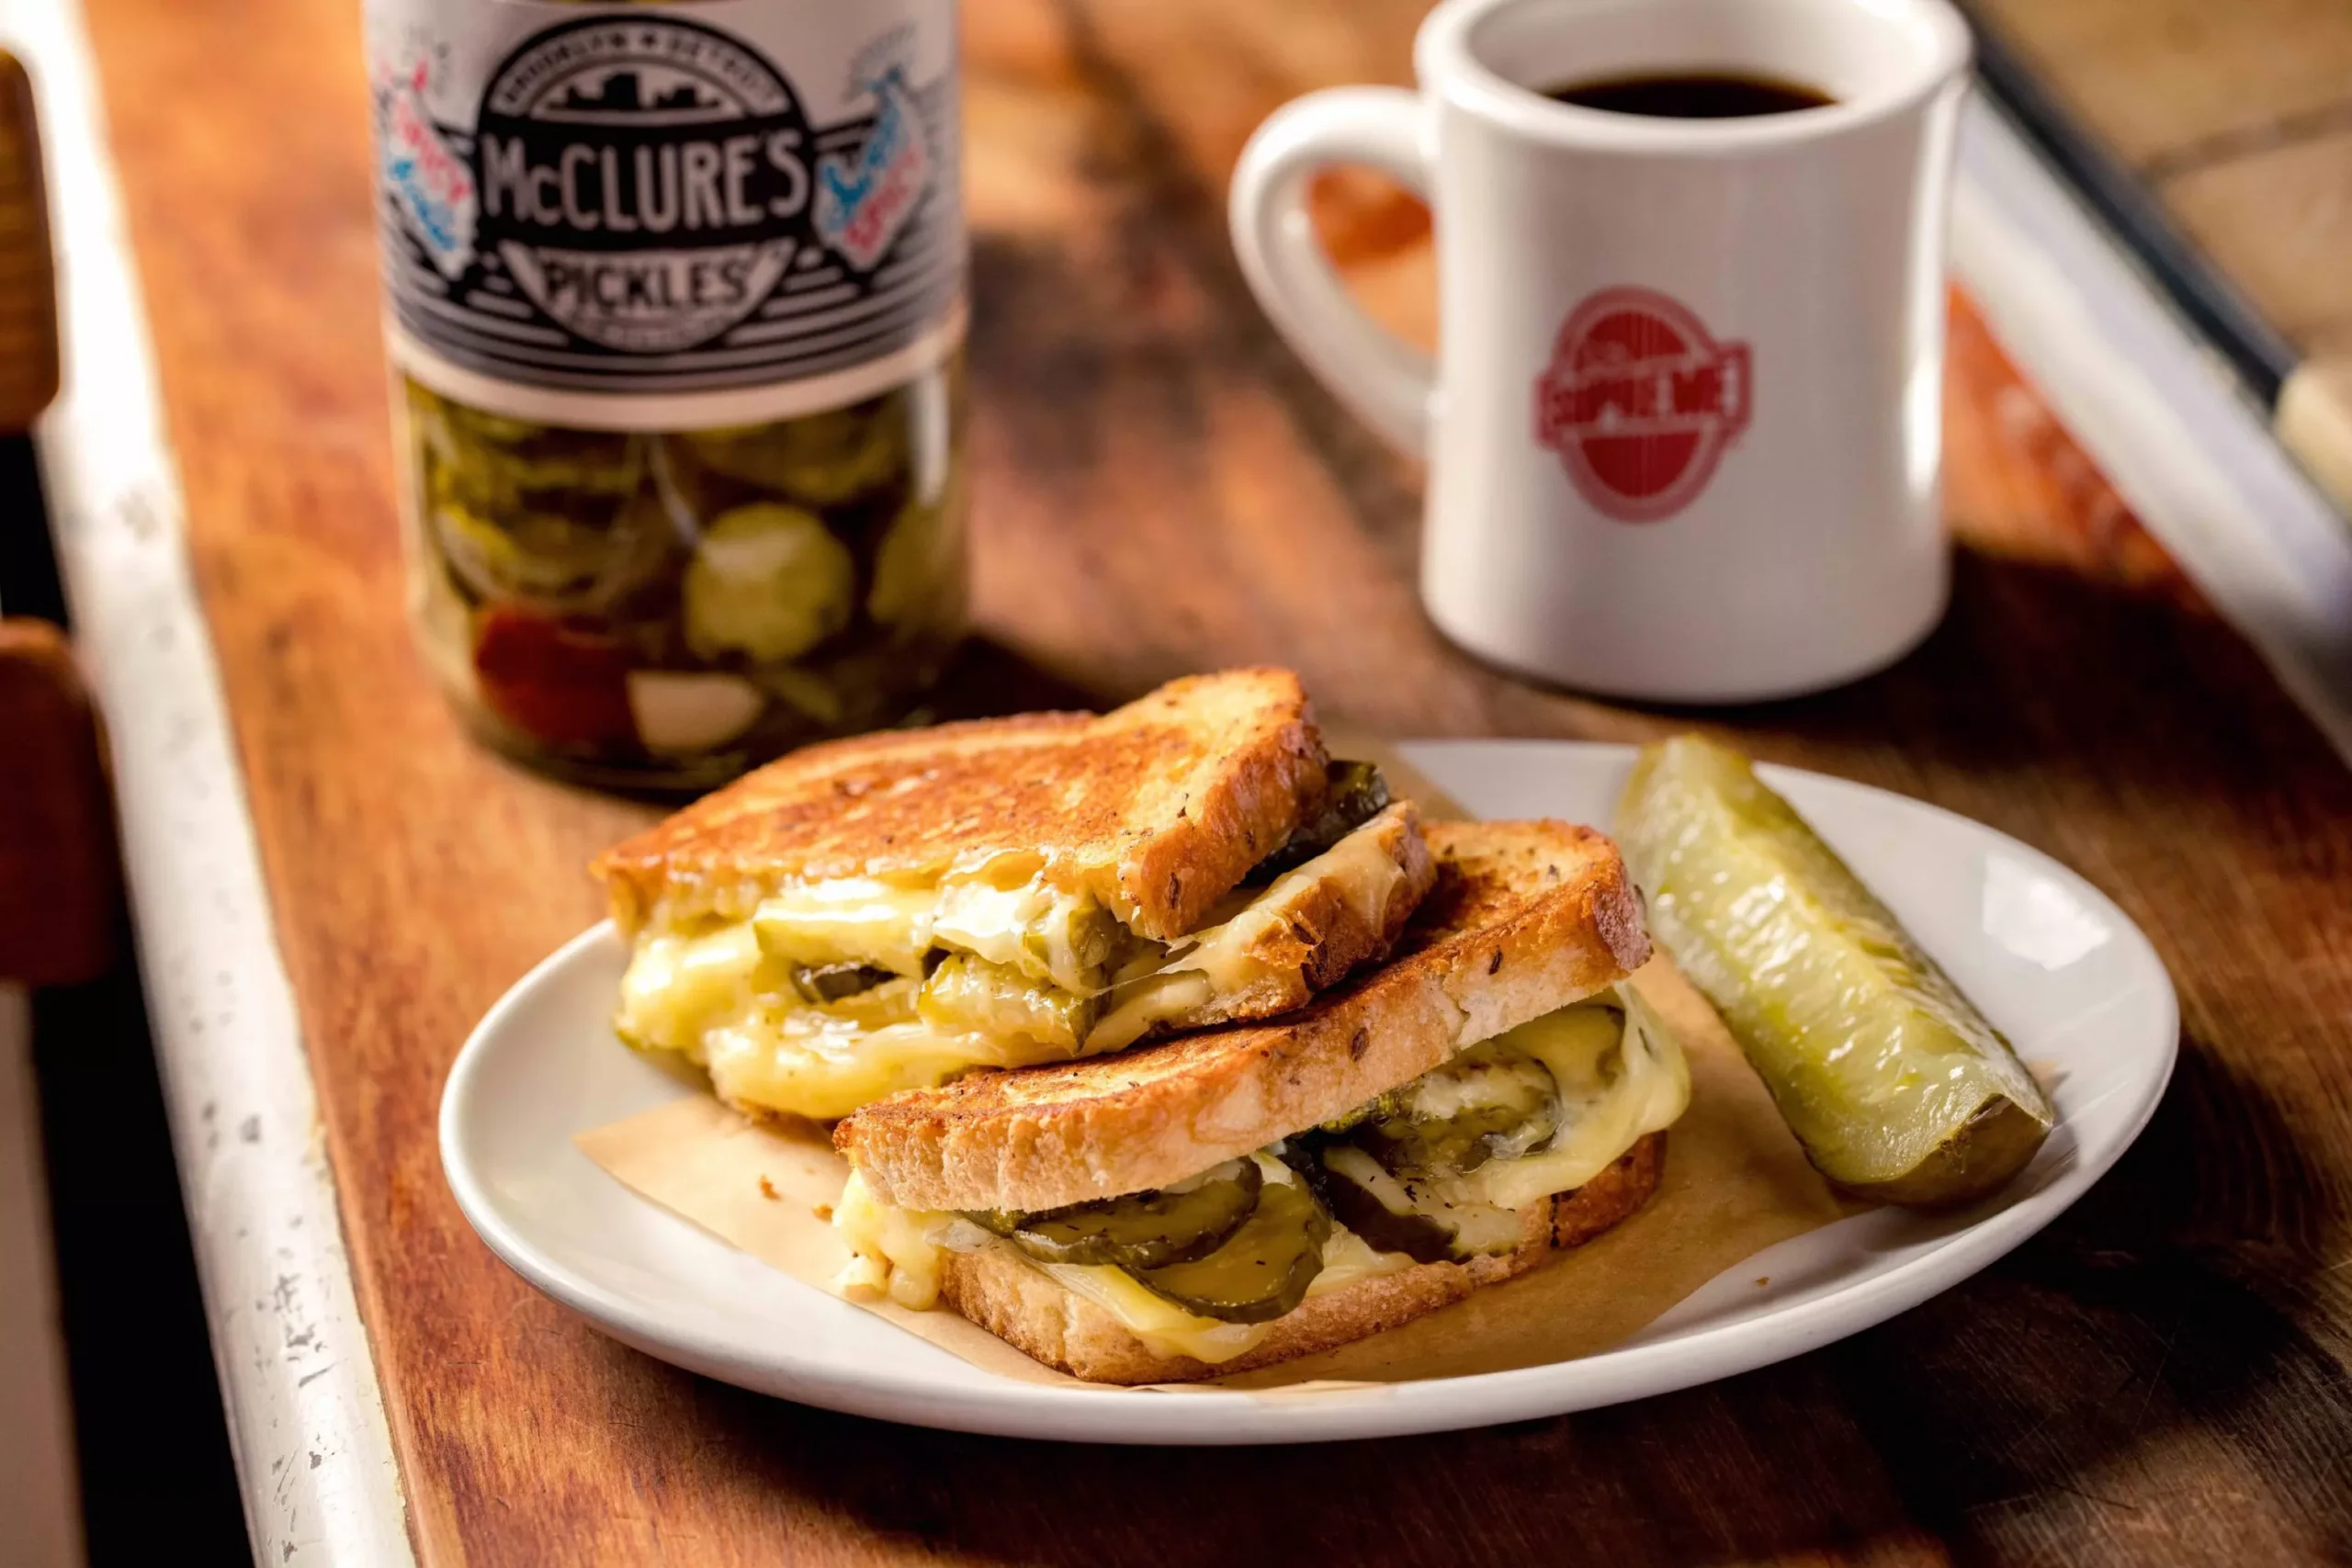 mcclures-pickles-kanook-studio-toastie-takeover10